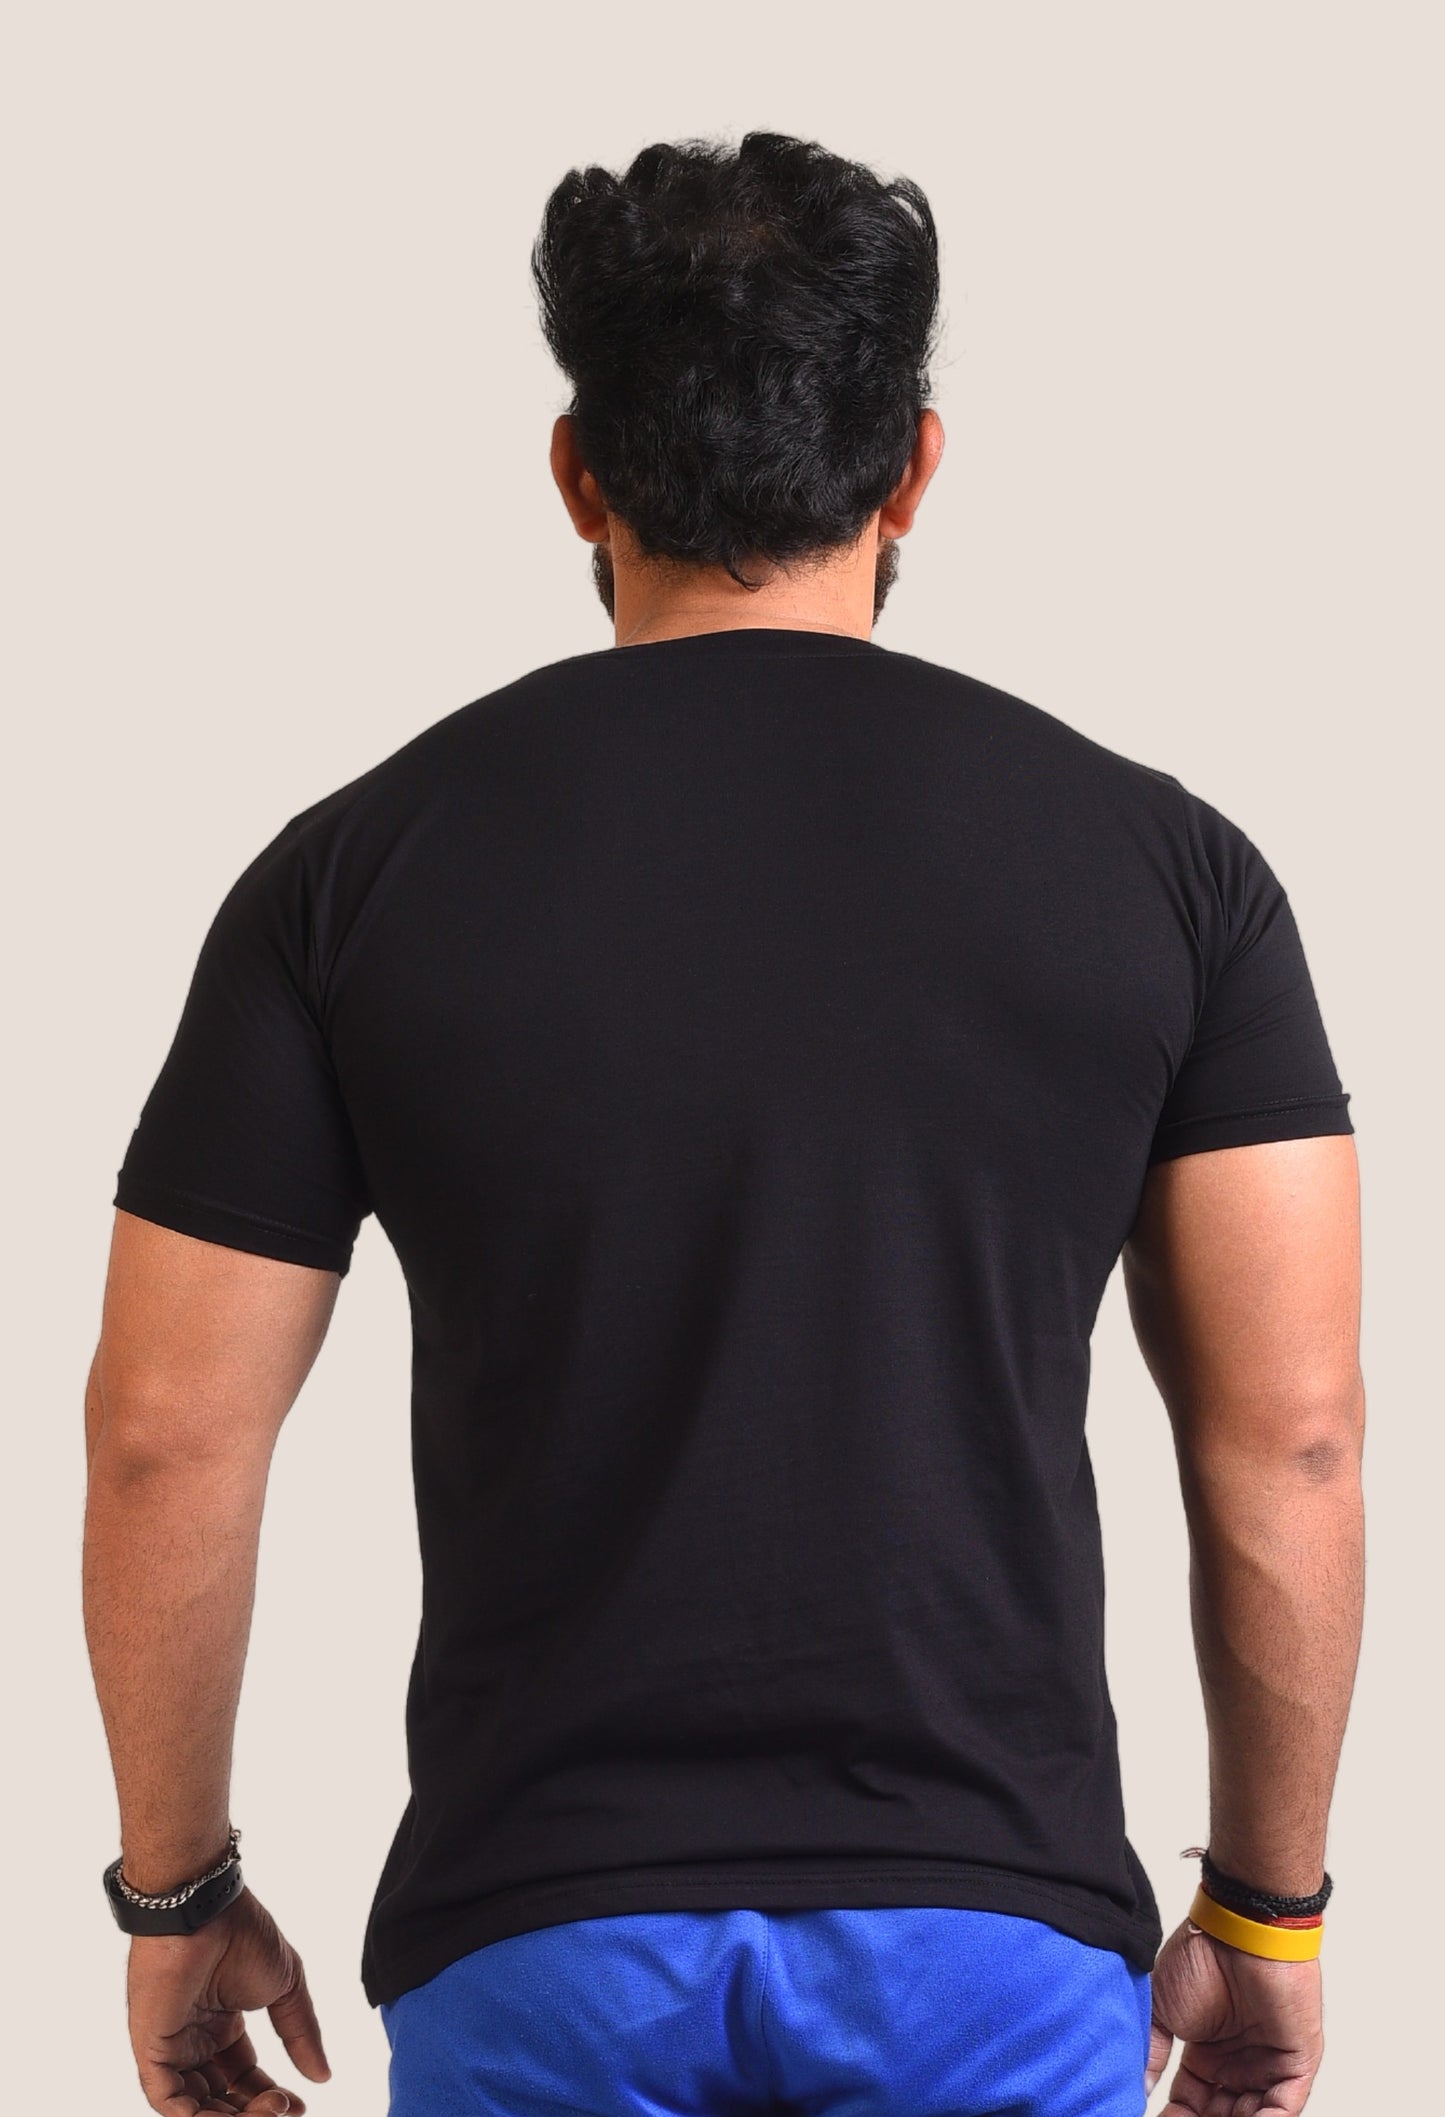 Gym T Shirt - Deadlift - Men T-Shirt with premium cotton Lycra. The Sports T Shirt by Strong Soul